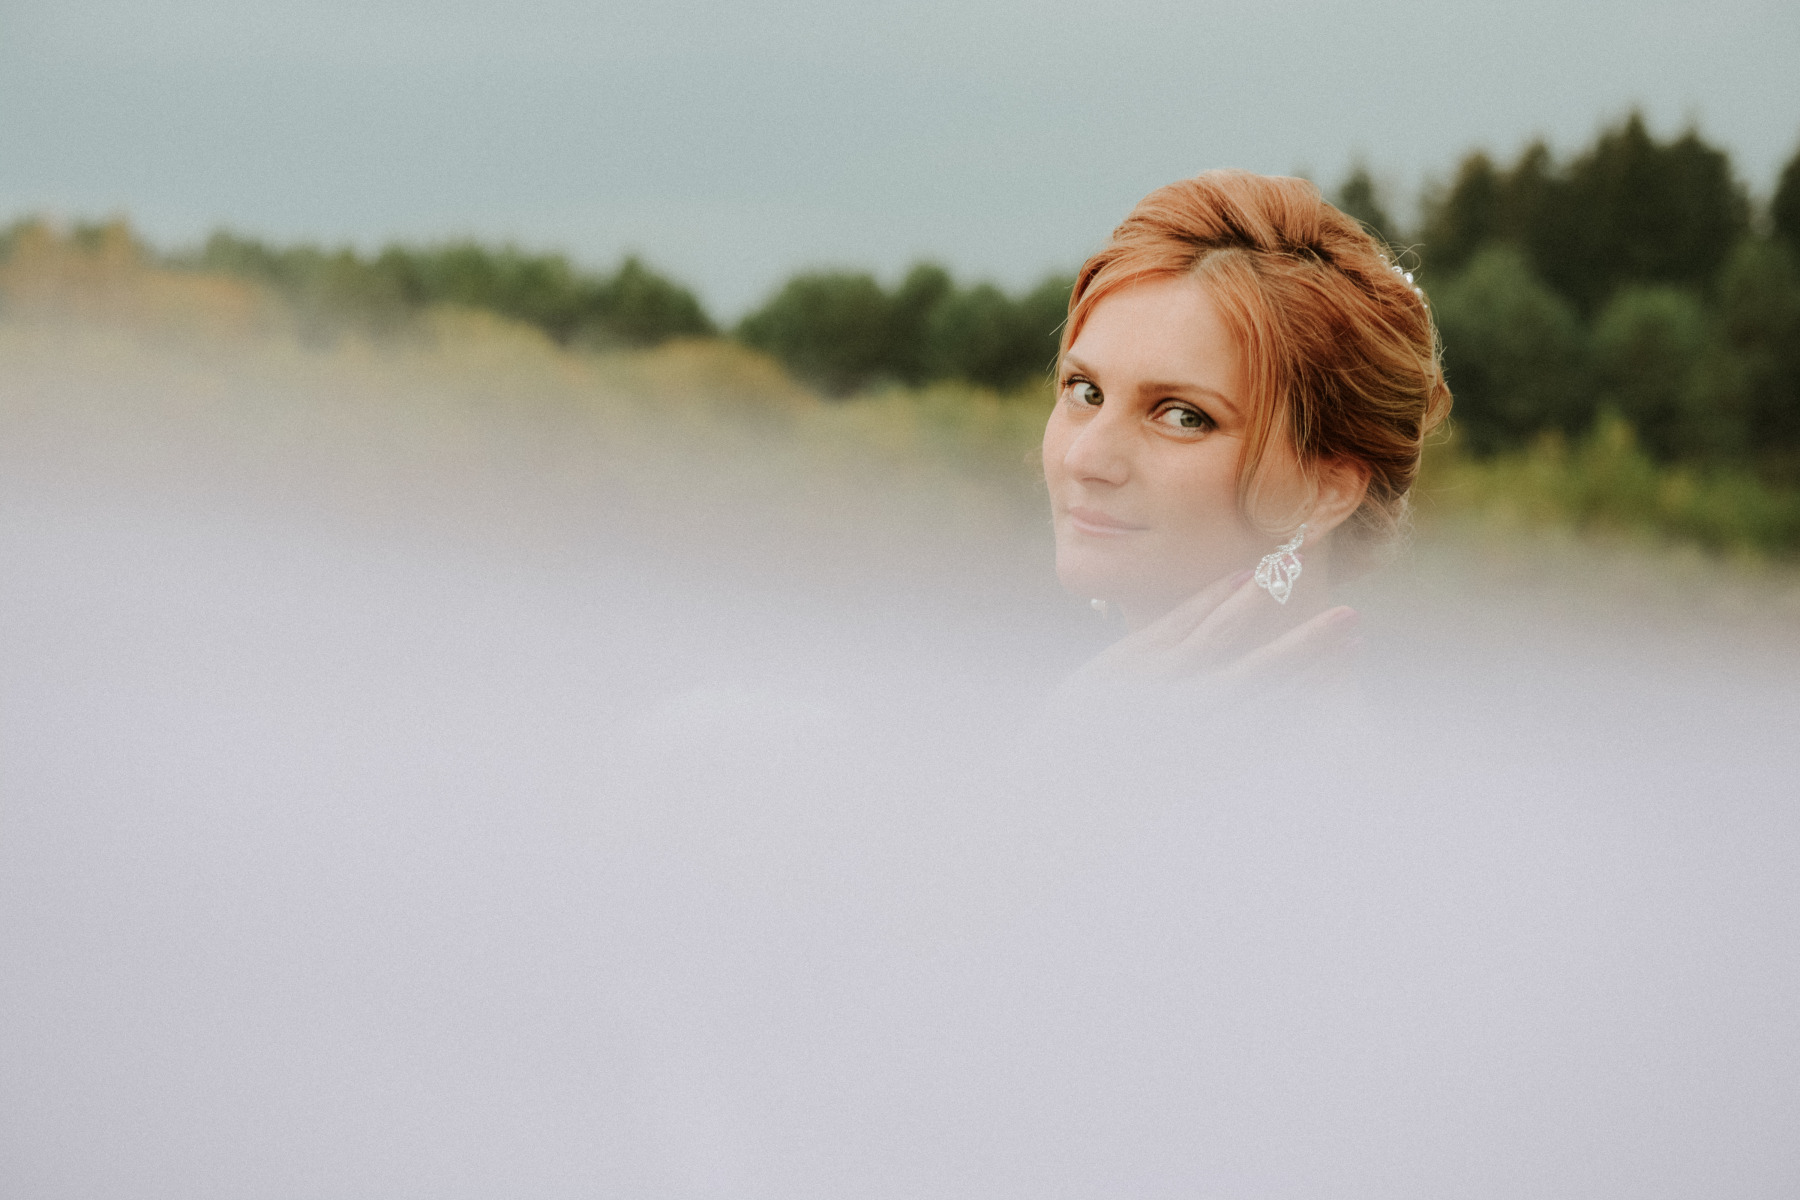 Невеста | Фотограф Виктория Зайцева | foto.by фото.бай